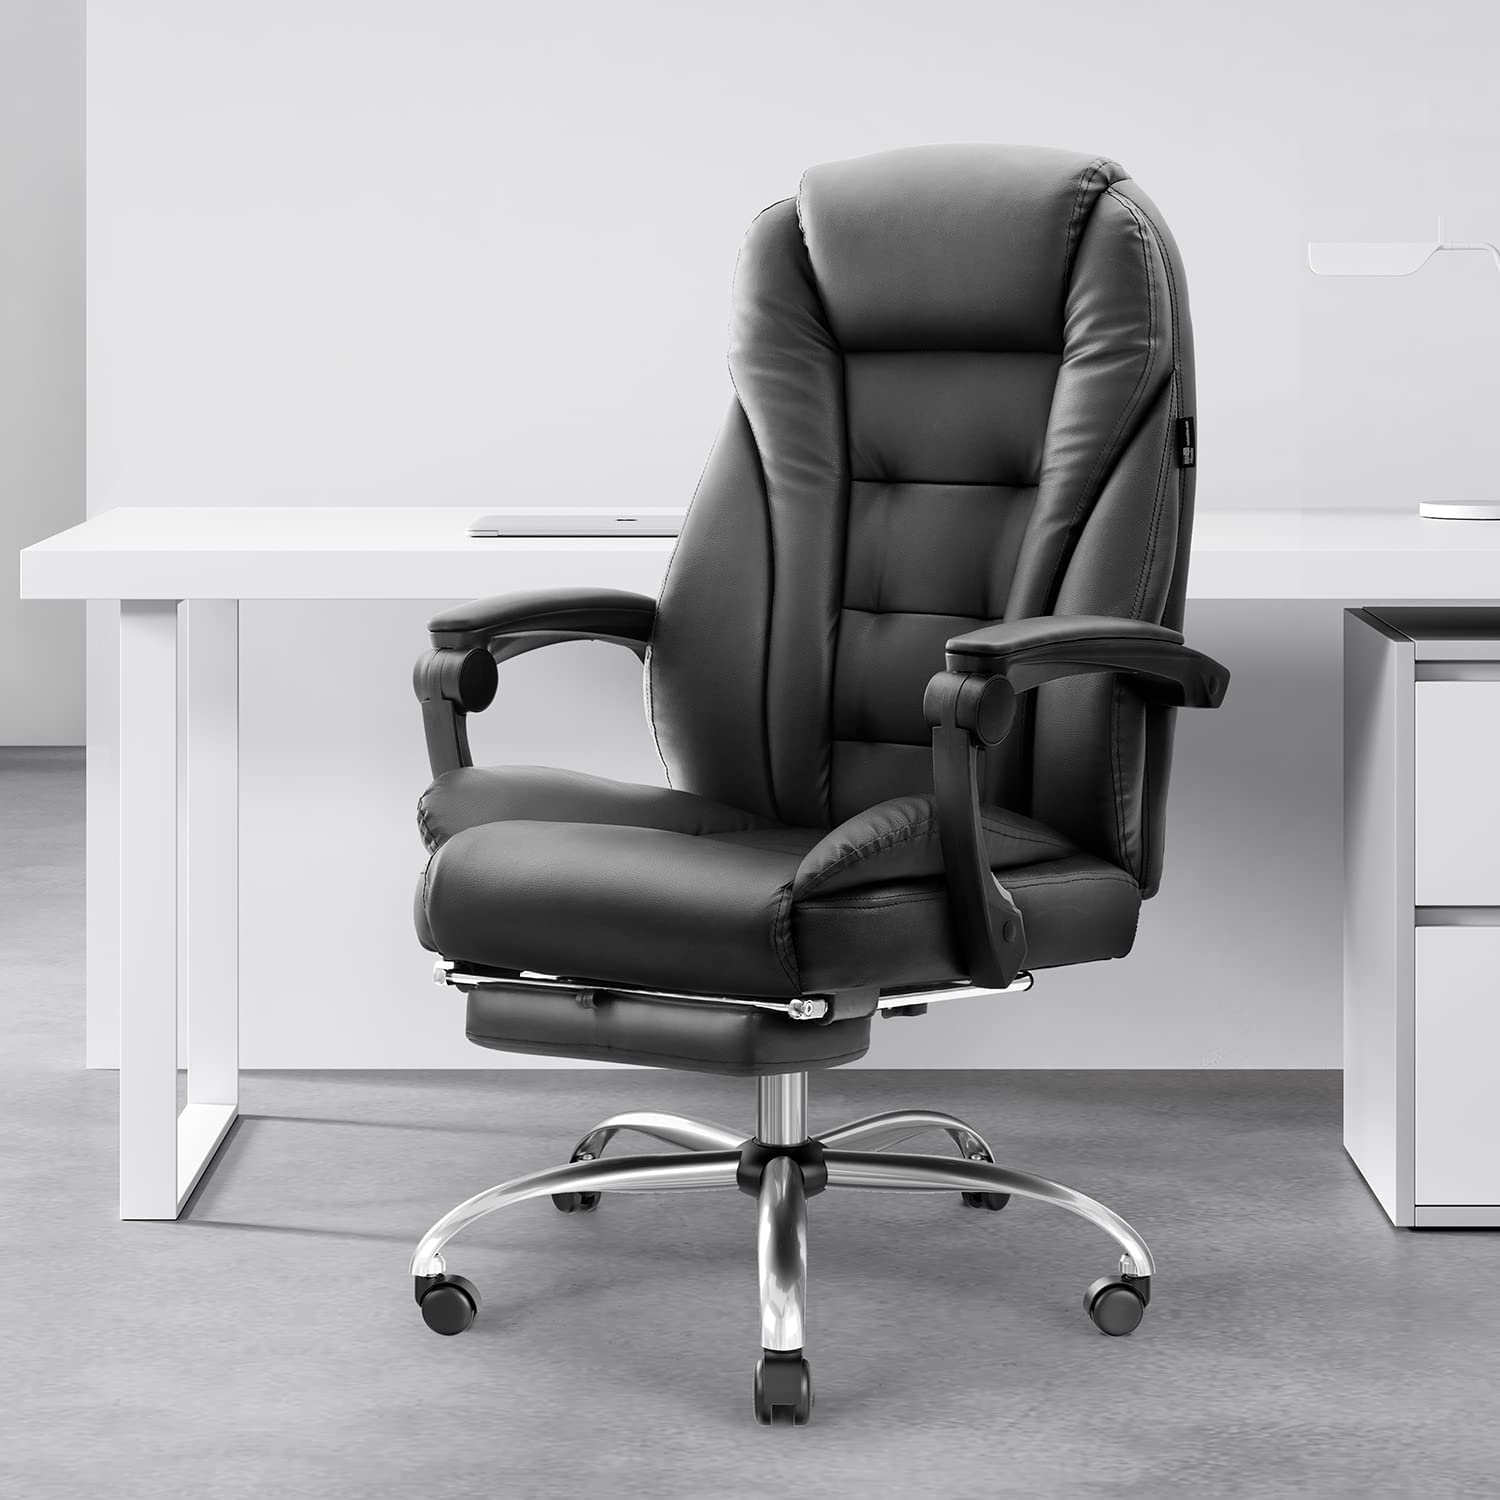 Hbada High-Back Upholstered Executive Desk Chair